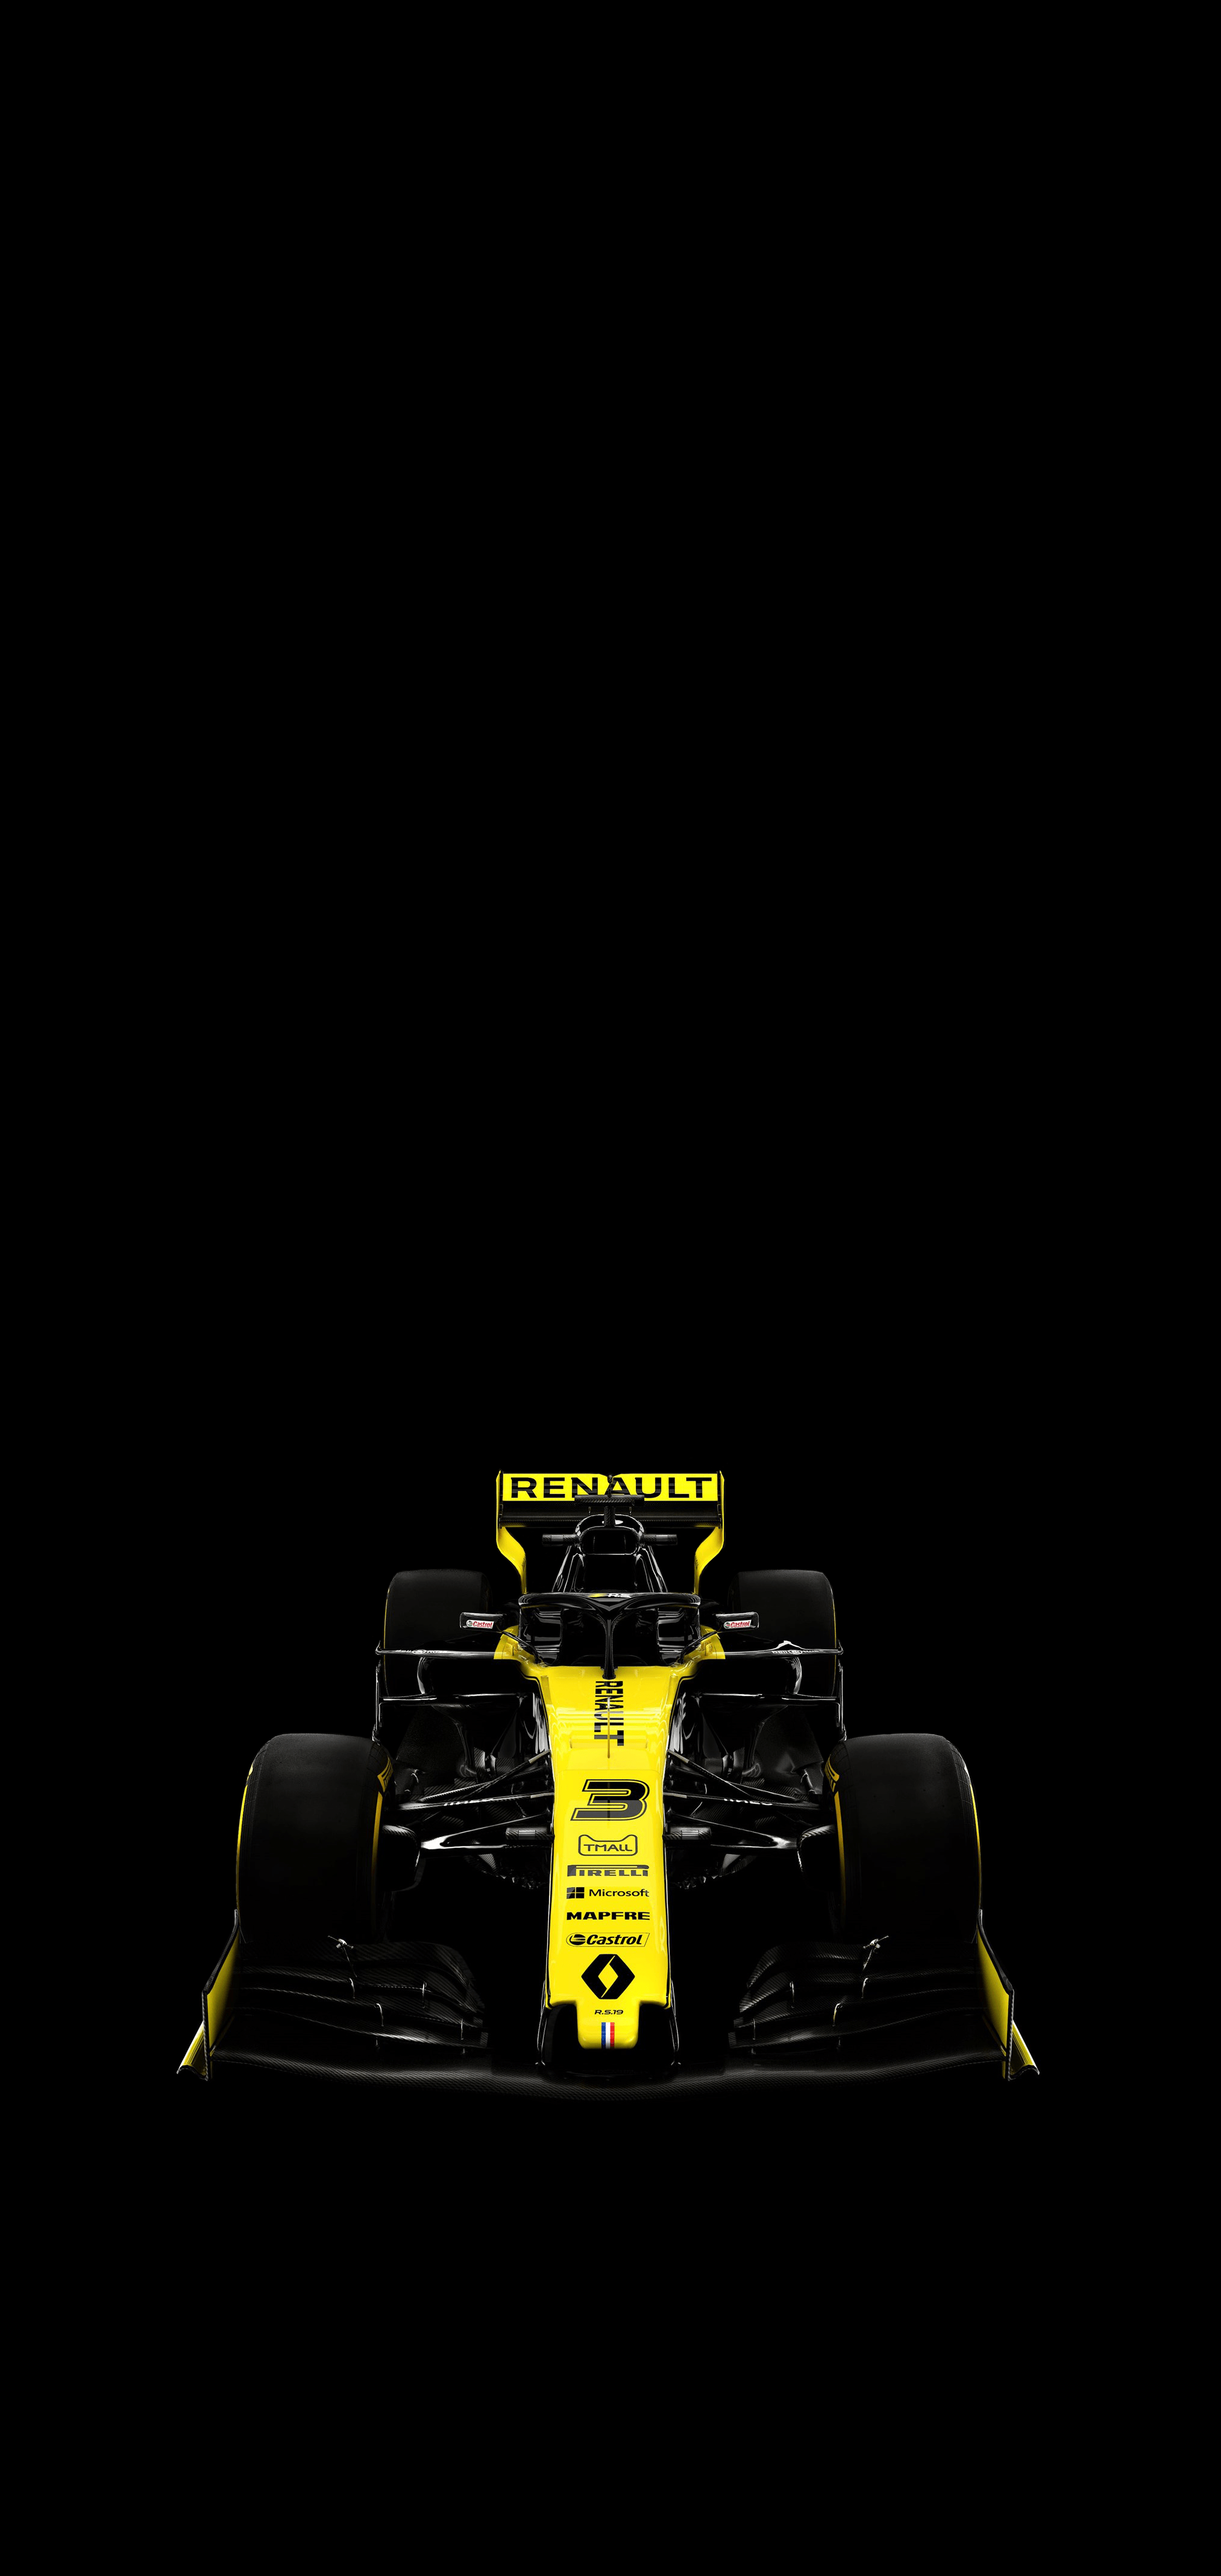 Daniel Ricciardo's R.S.19 [AMOLED Mobile Wallpaper]